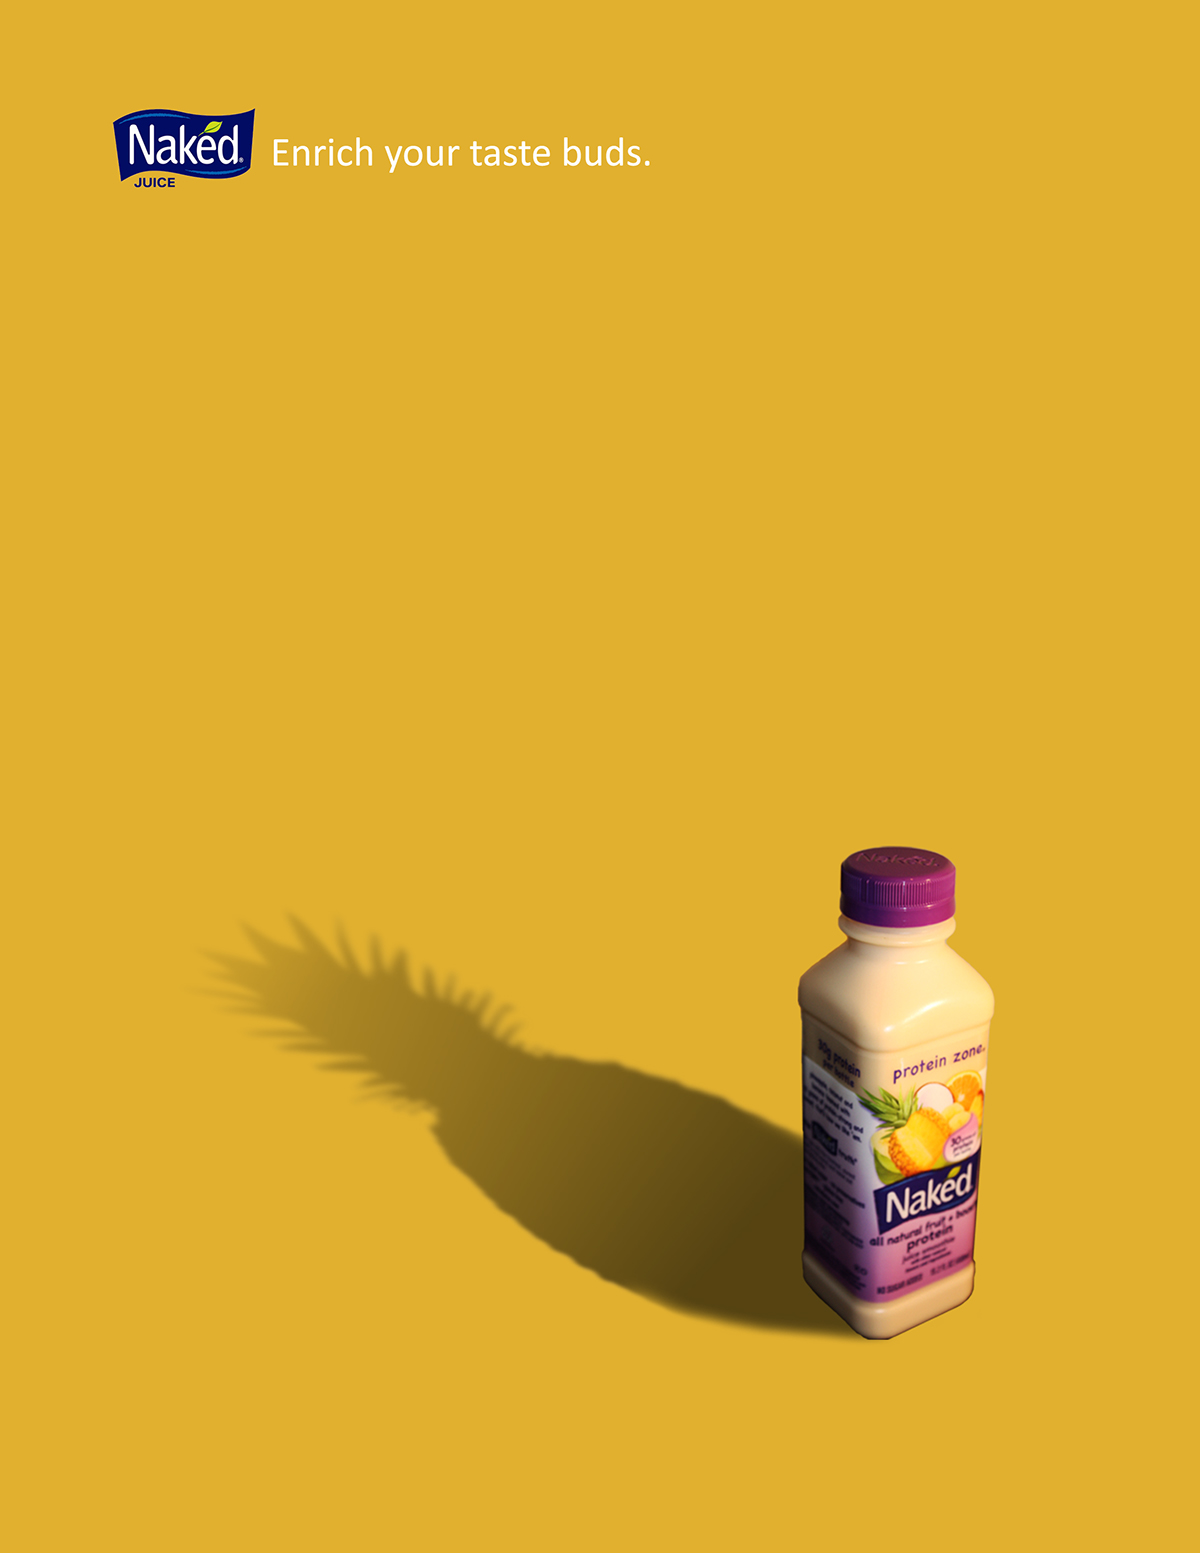 Naked Juice Ad